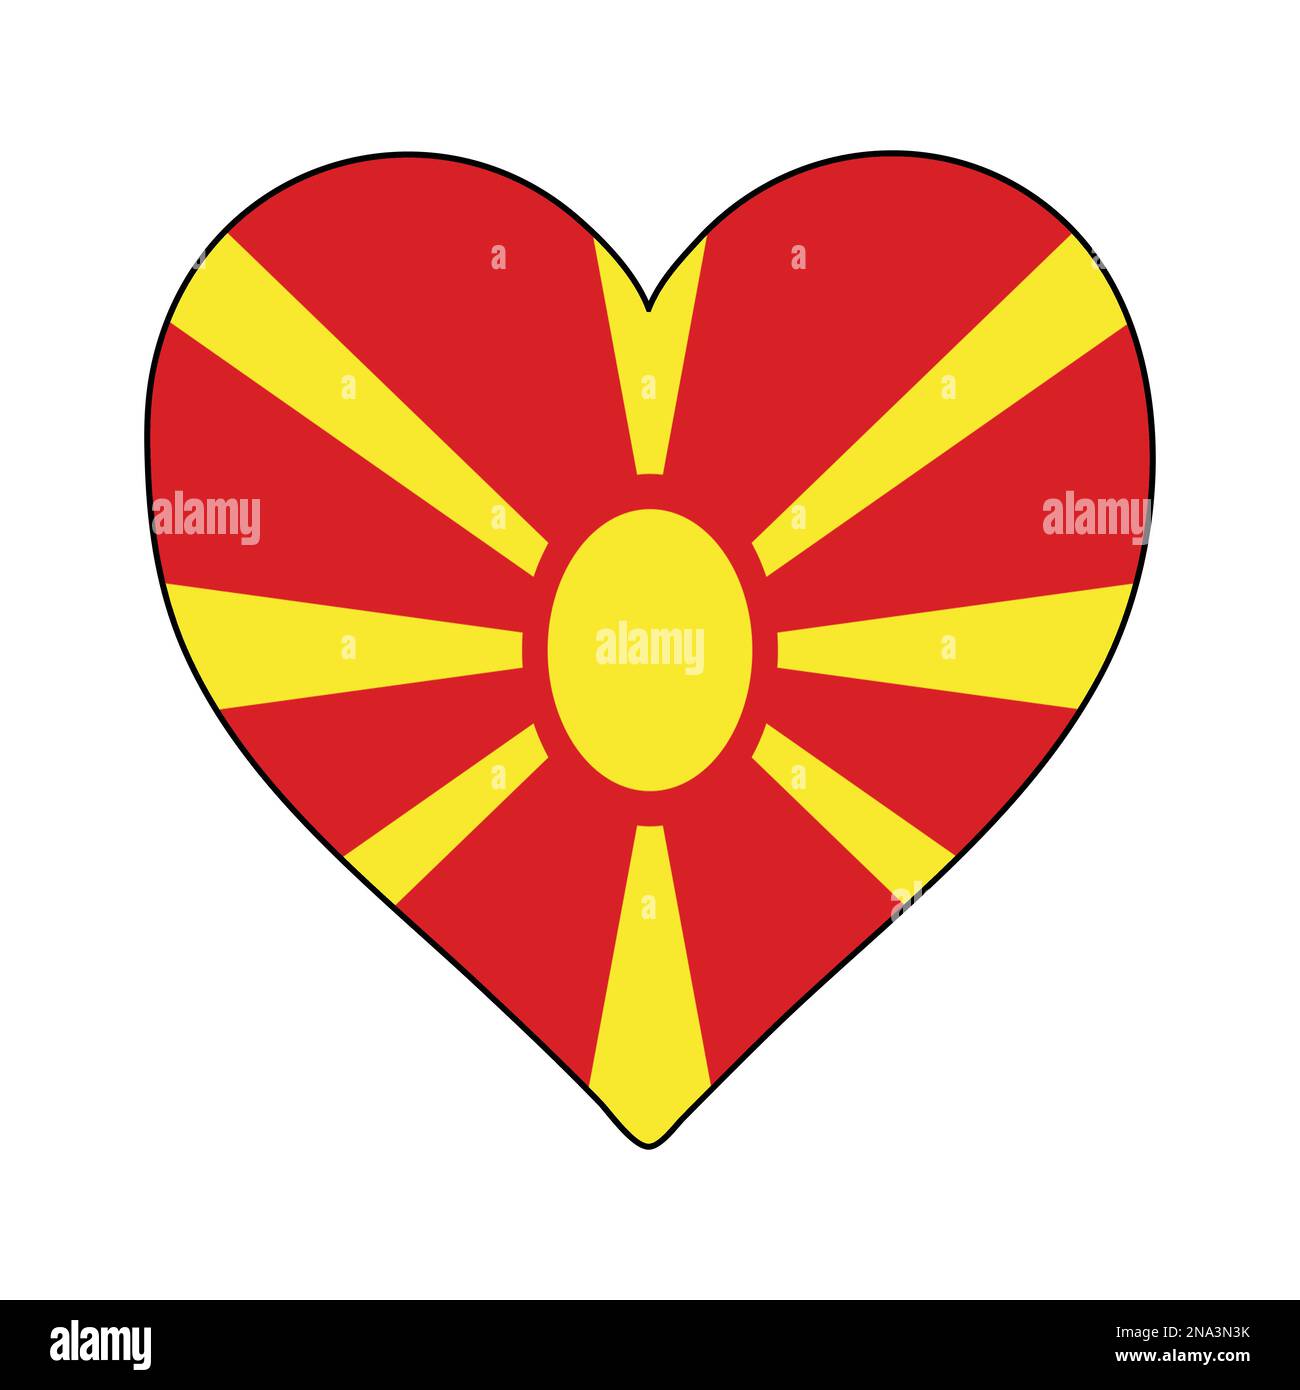 North Macedonia Heart Shape Flag. Love North Macedonia. Visit North Macedonia. Southern Europe. Europe. European Union. Vector Illustration Graphic De Stock Vector